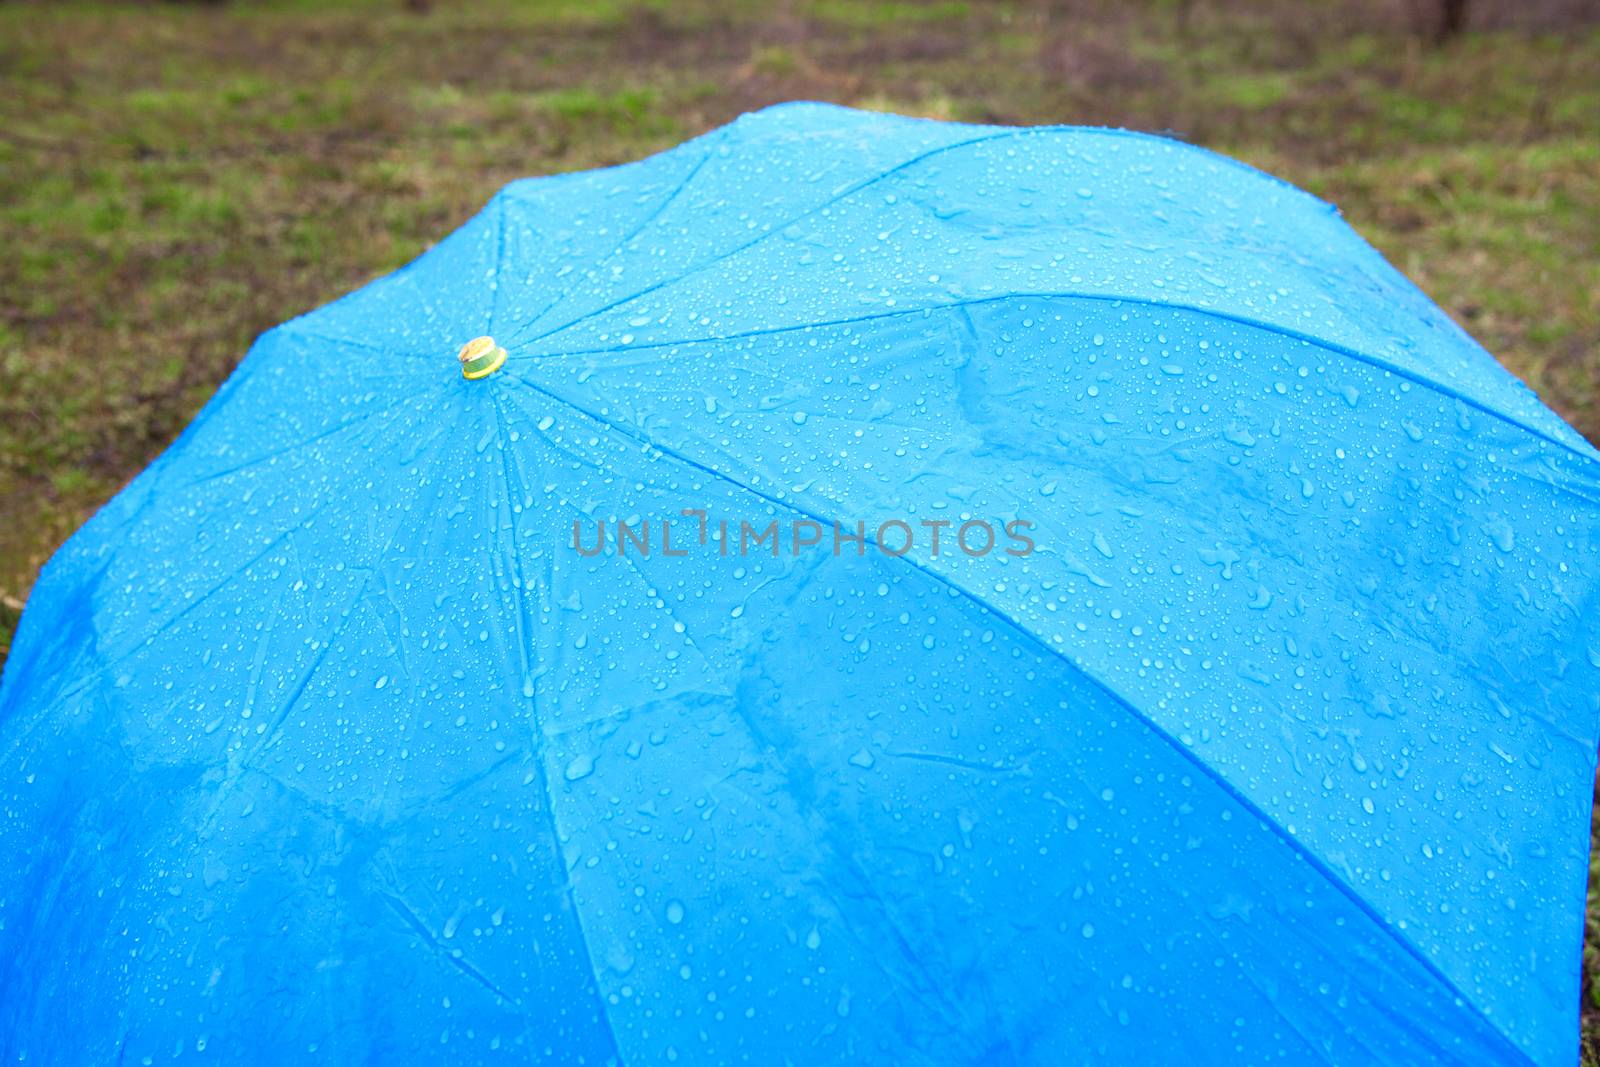 background with rainy umbrella by vsurkov